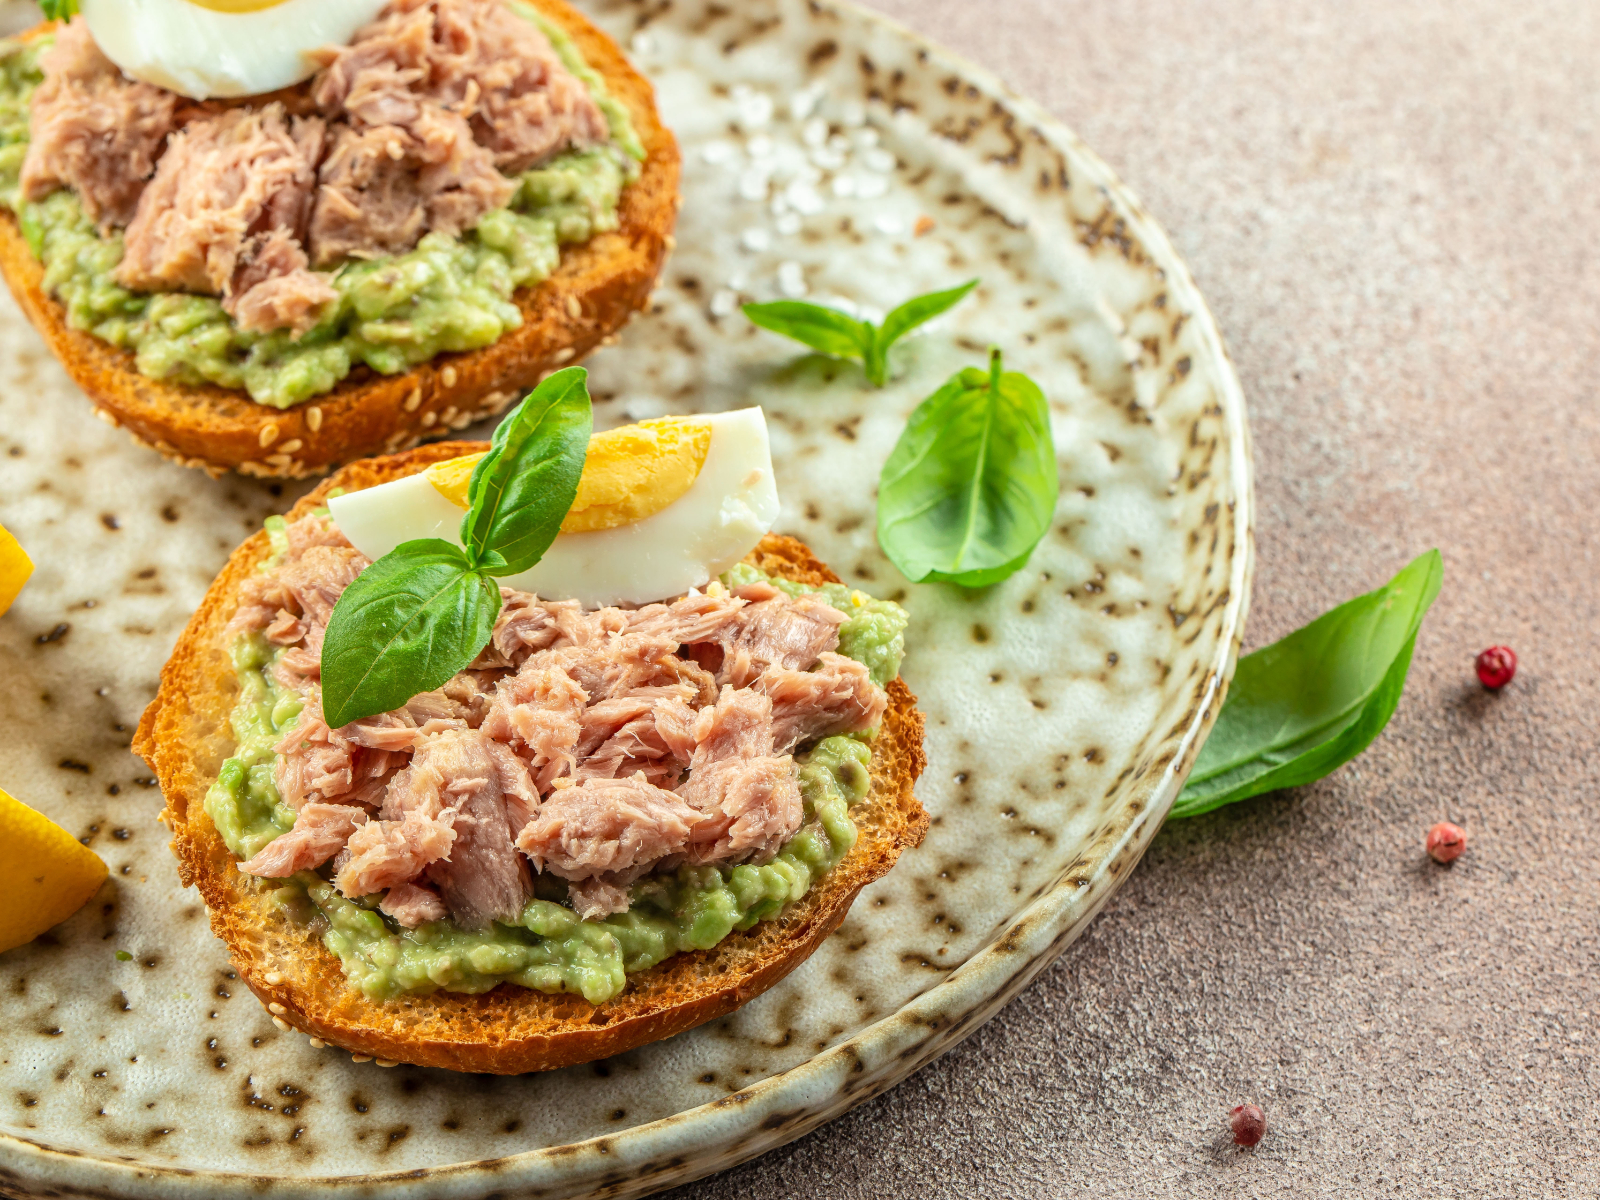 tuna salad on bread with avocado and egg